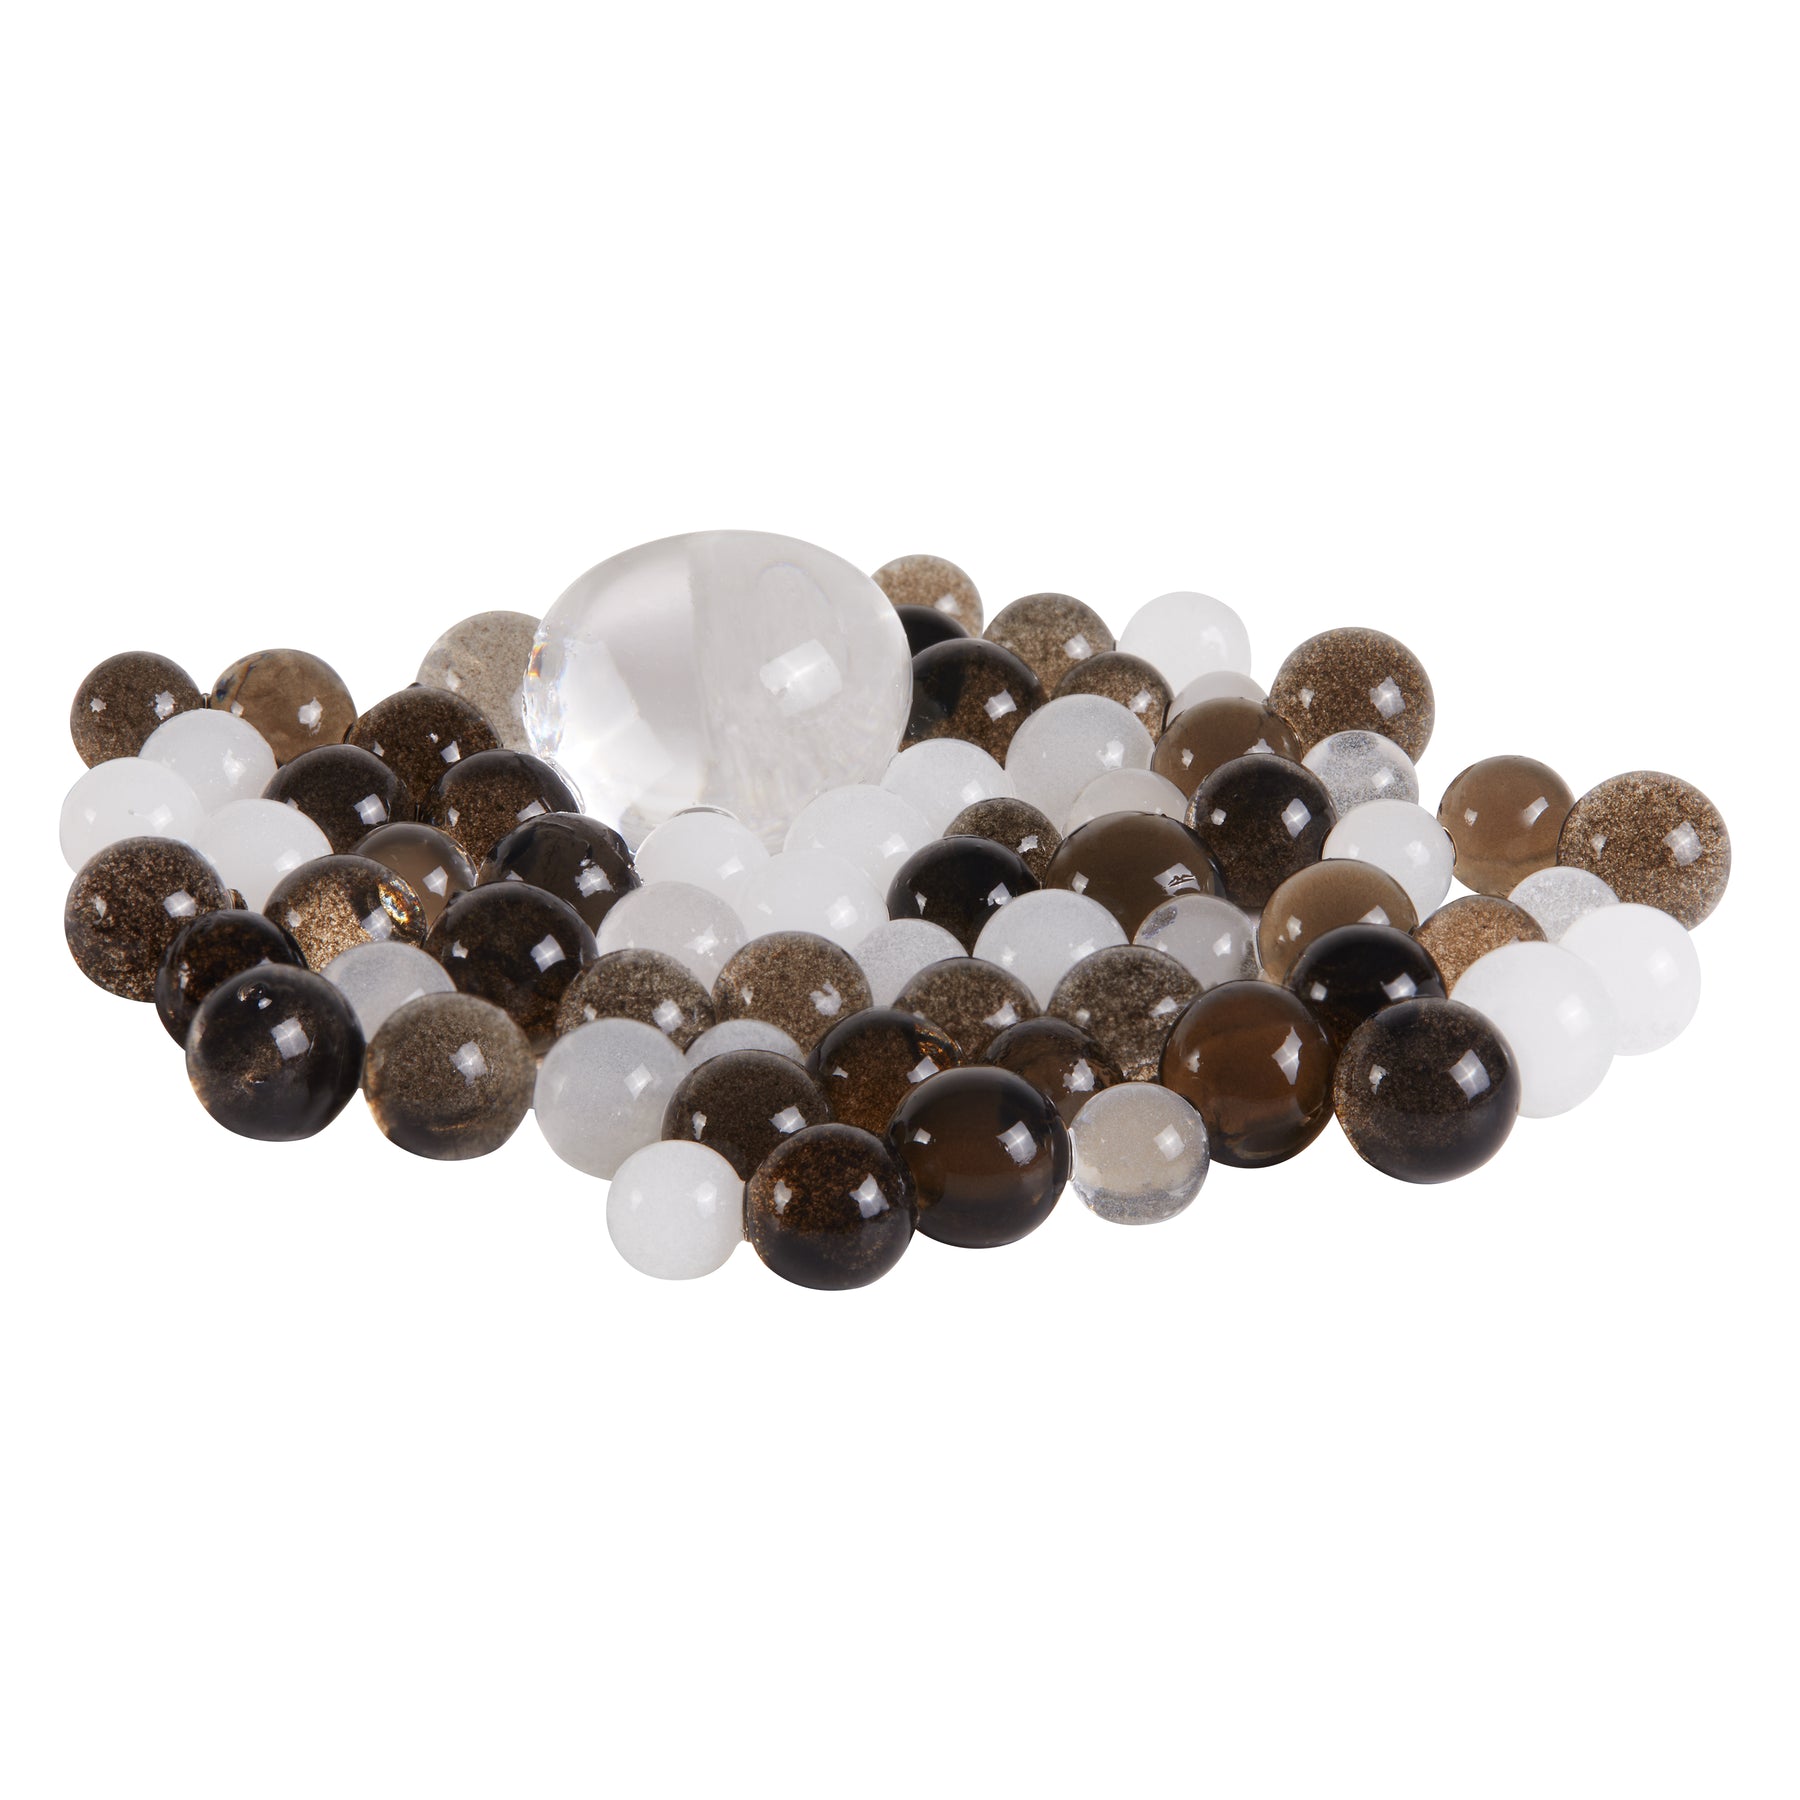 Aqueon - Pure Betta Beads